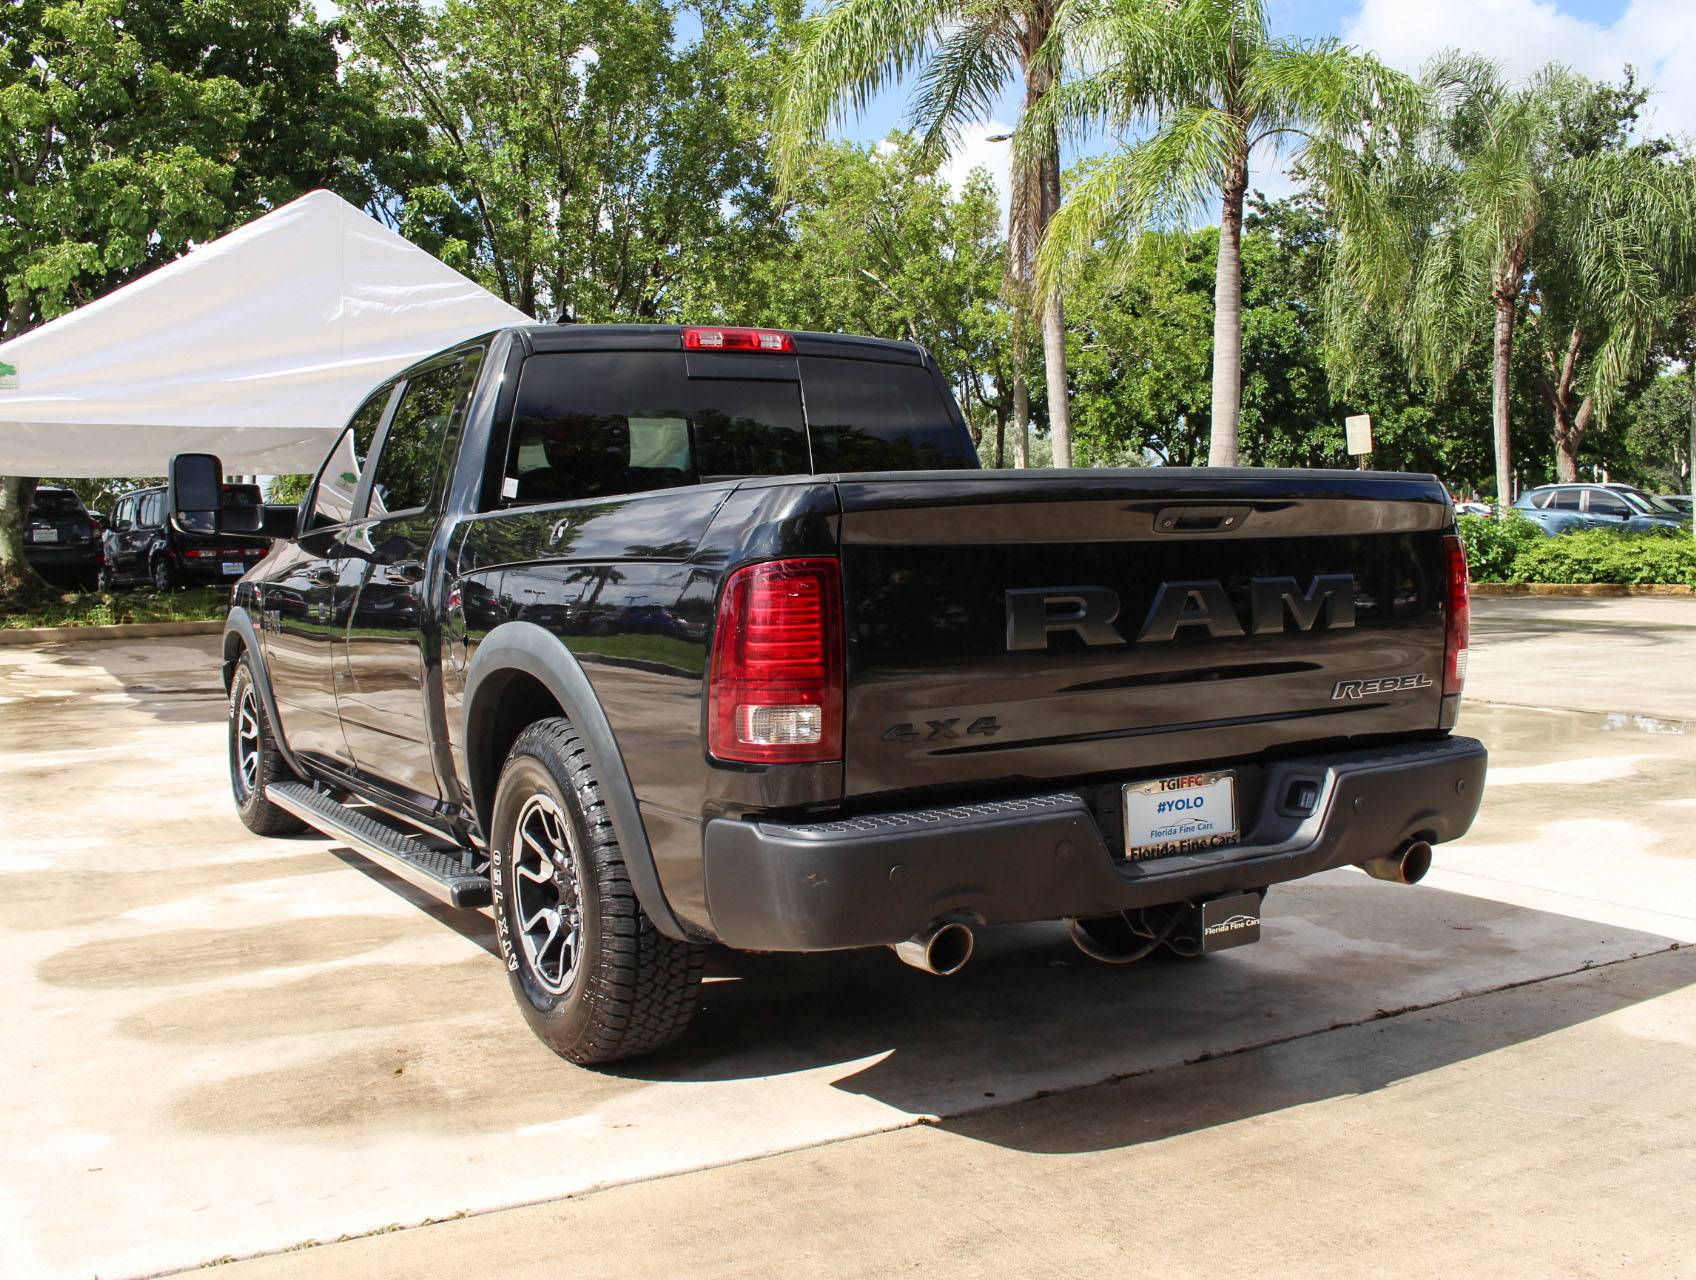 Florida Fine Cars - Used RAM 1500 2016 MIAMI Rebel 4x4